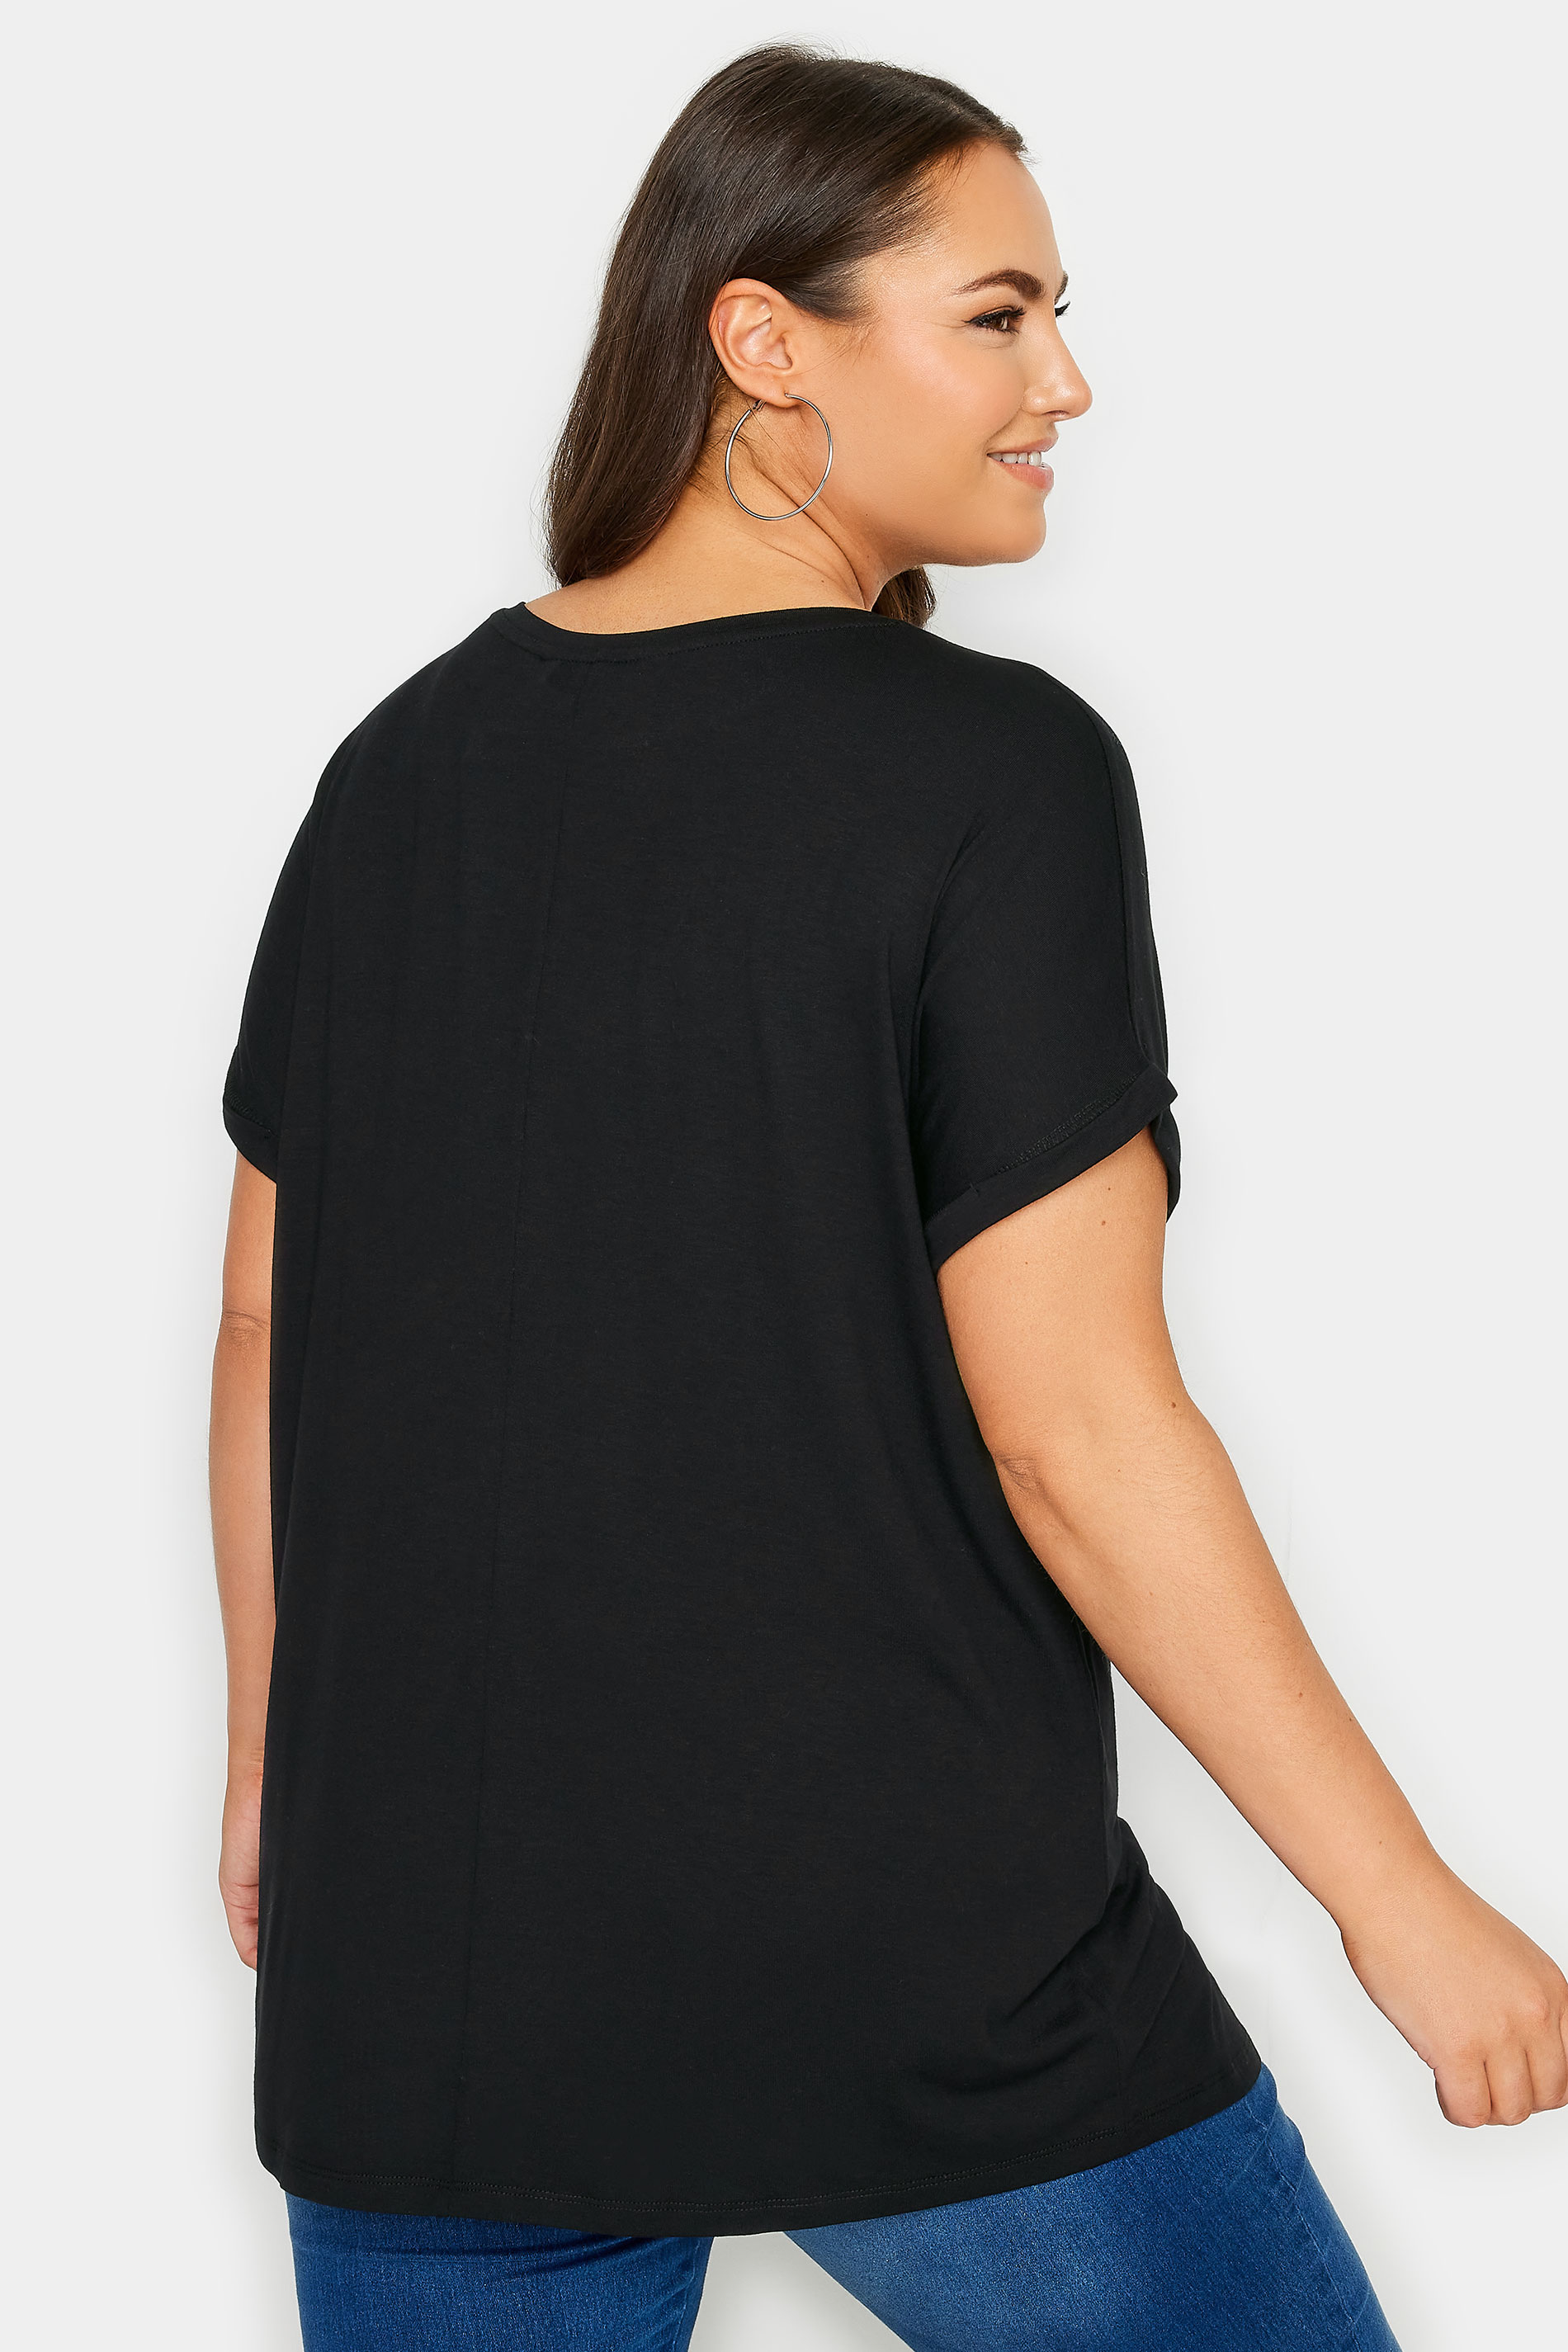 YOURS Plus Size Black Unicorn Print Sequin T-Shirt | Yours Clothing 3